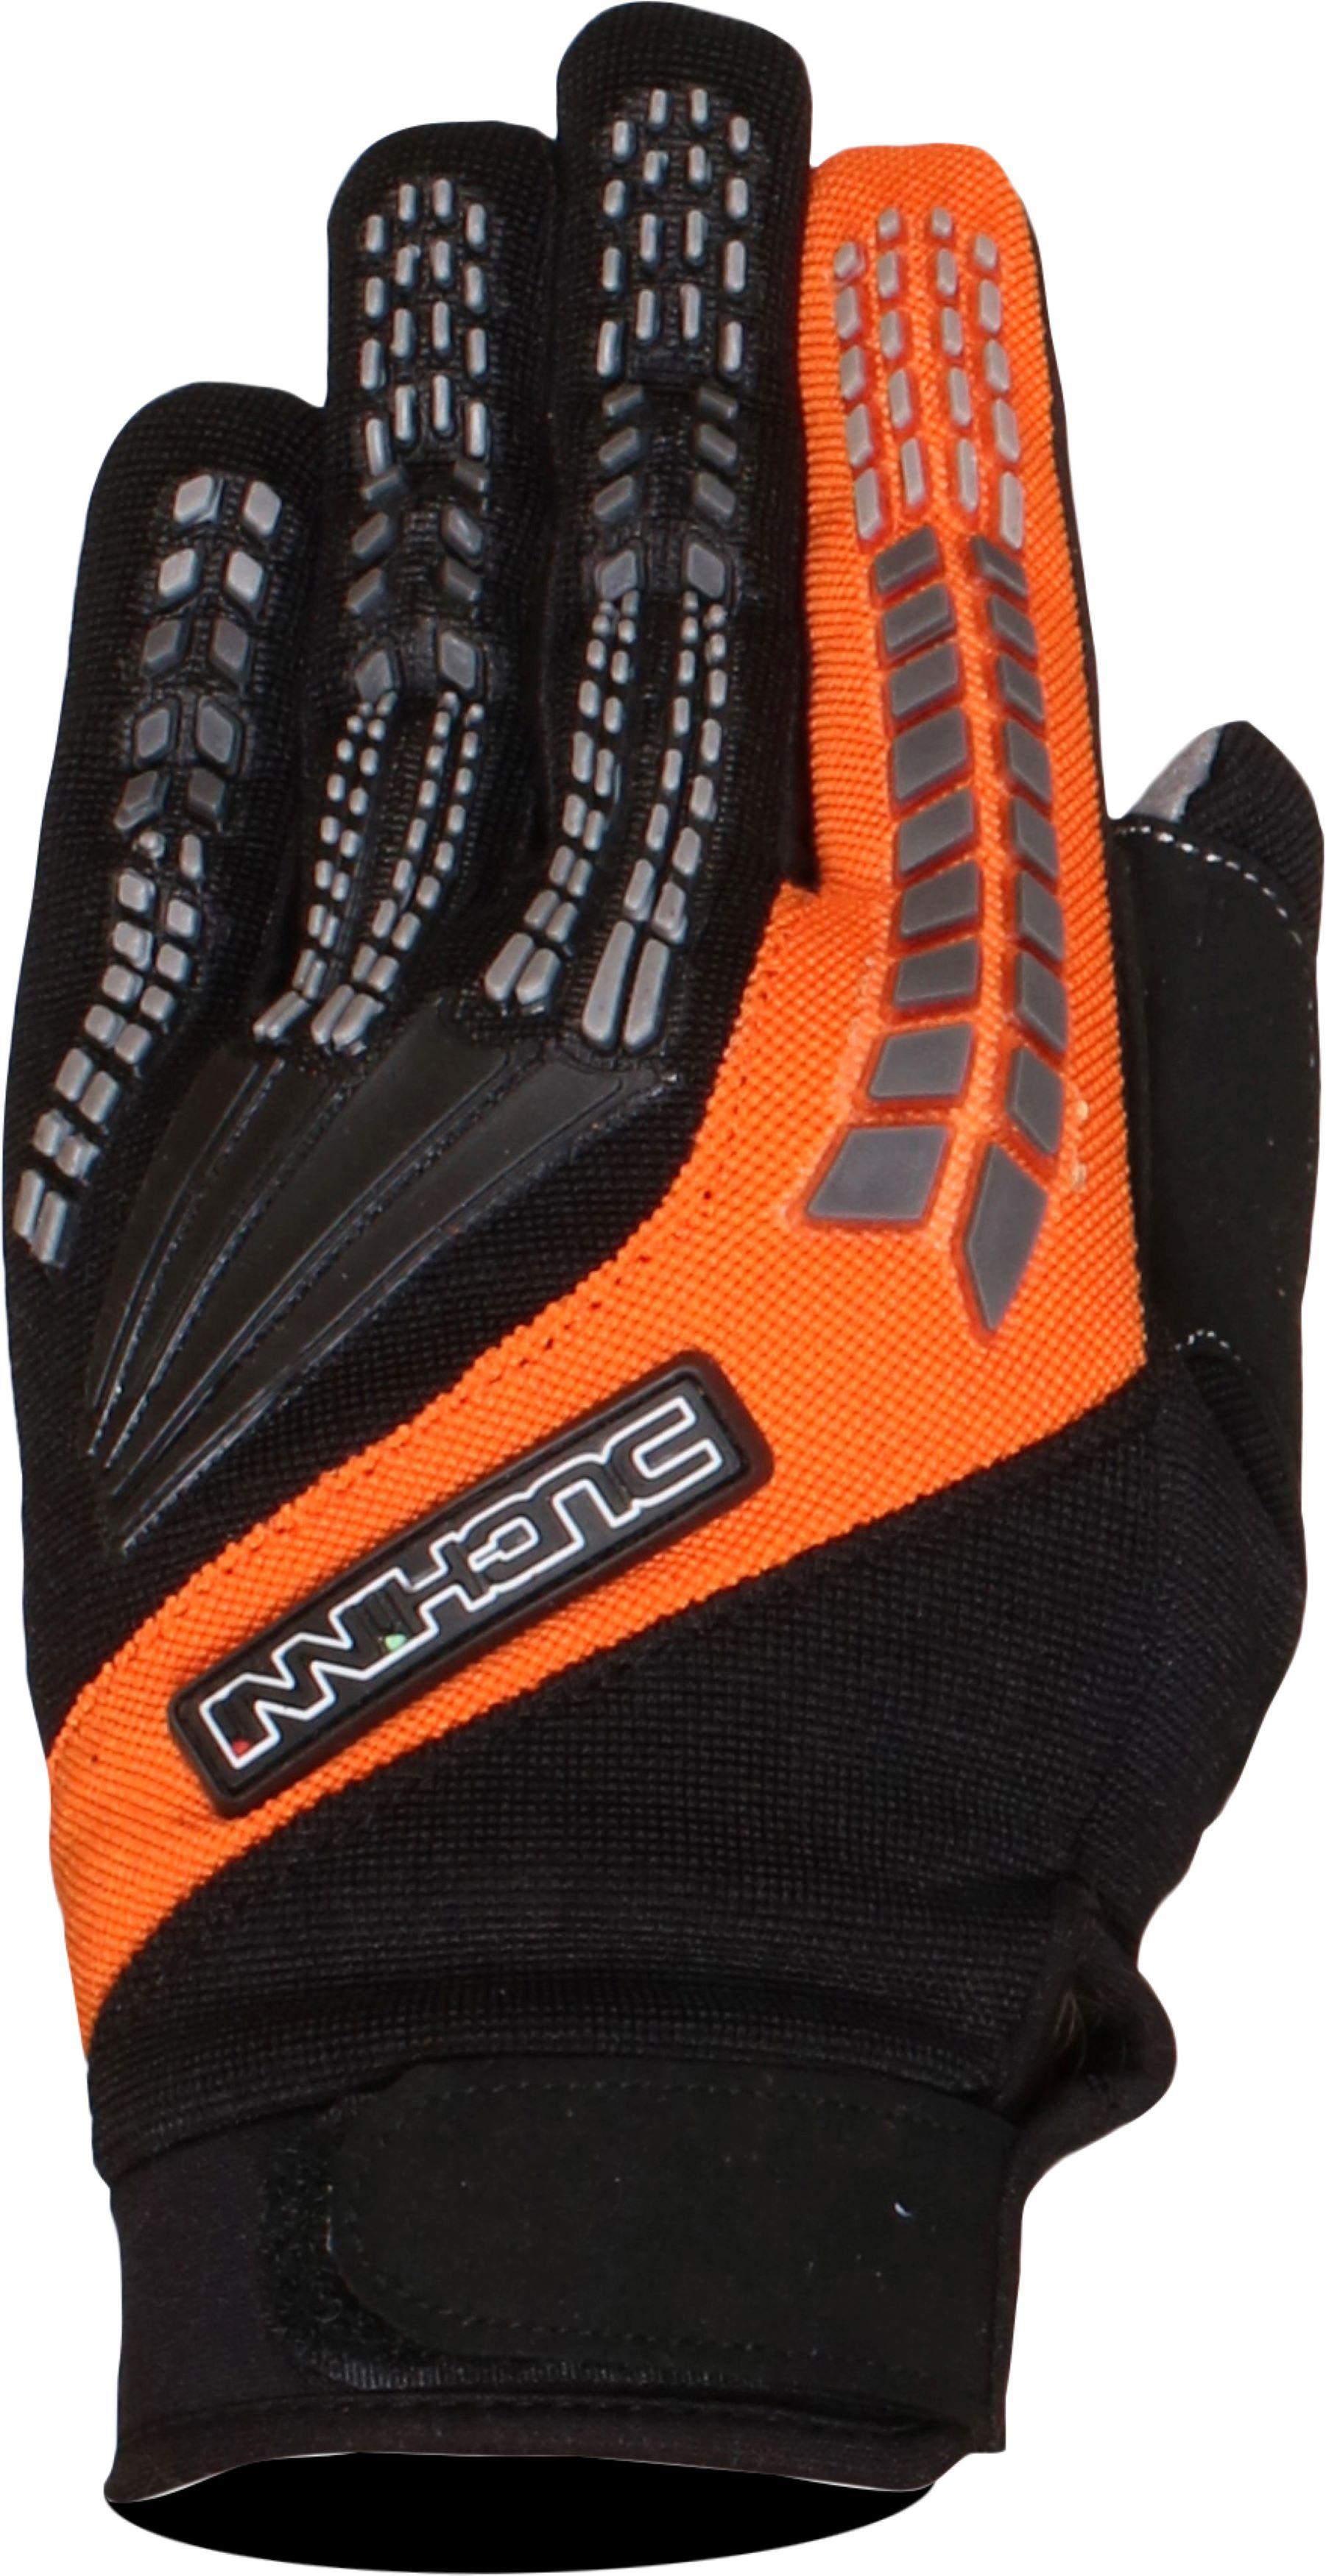 Duchinni Focus Motorcycle Gloves - Black And Orange, M